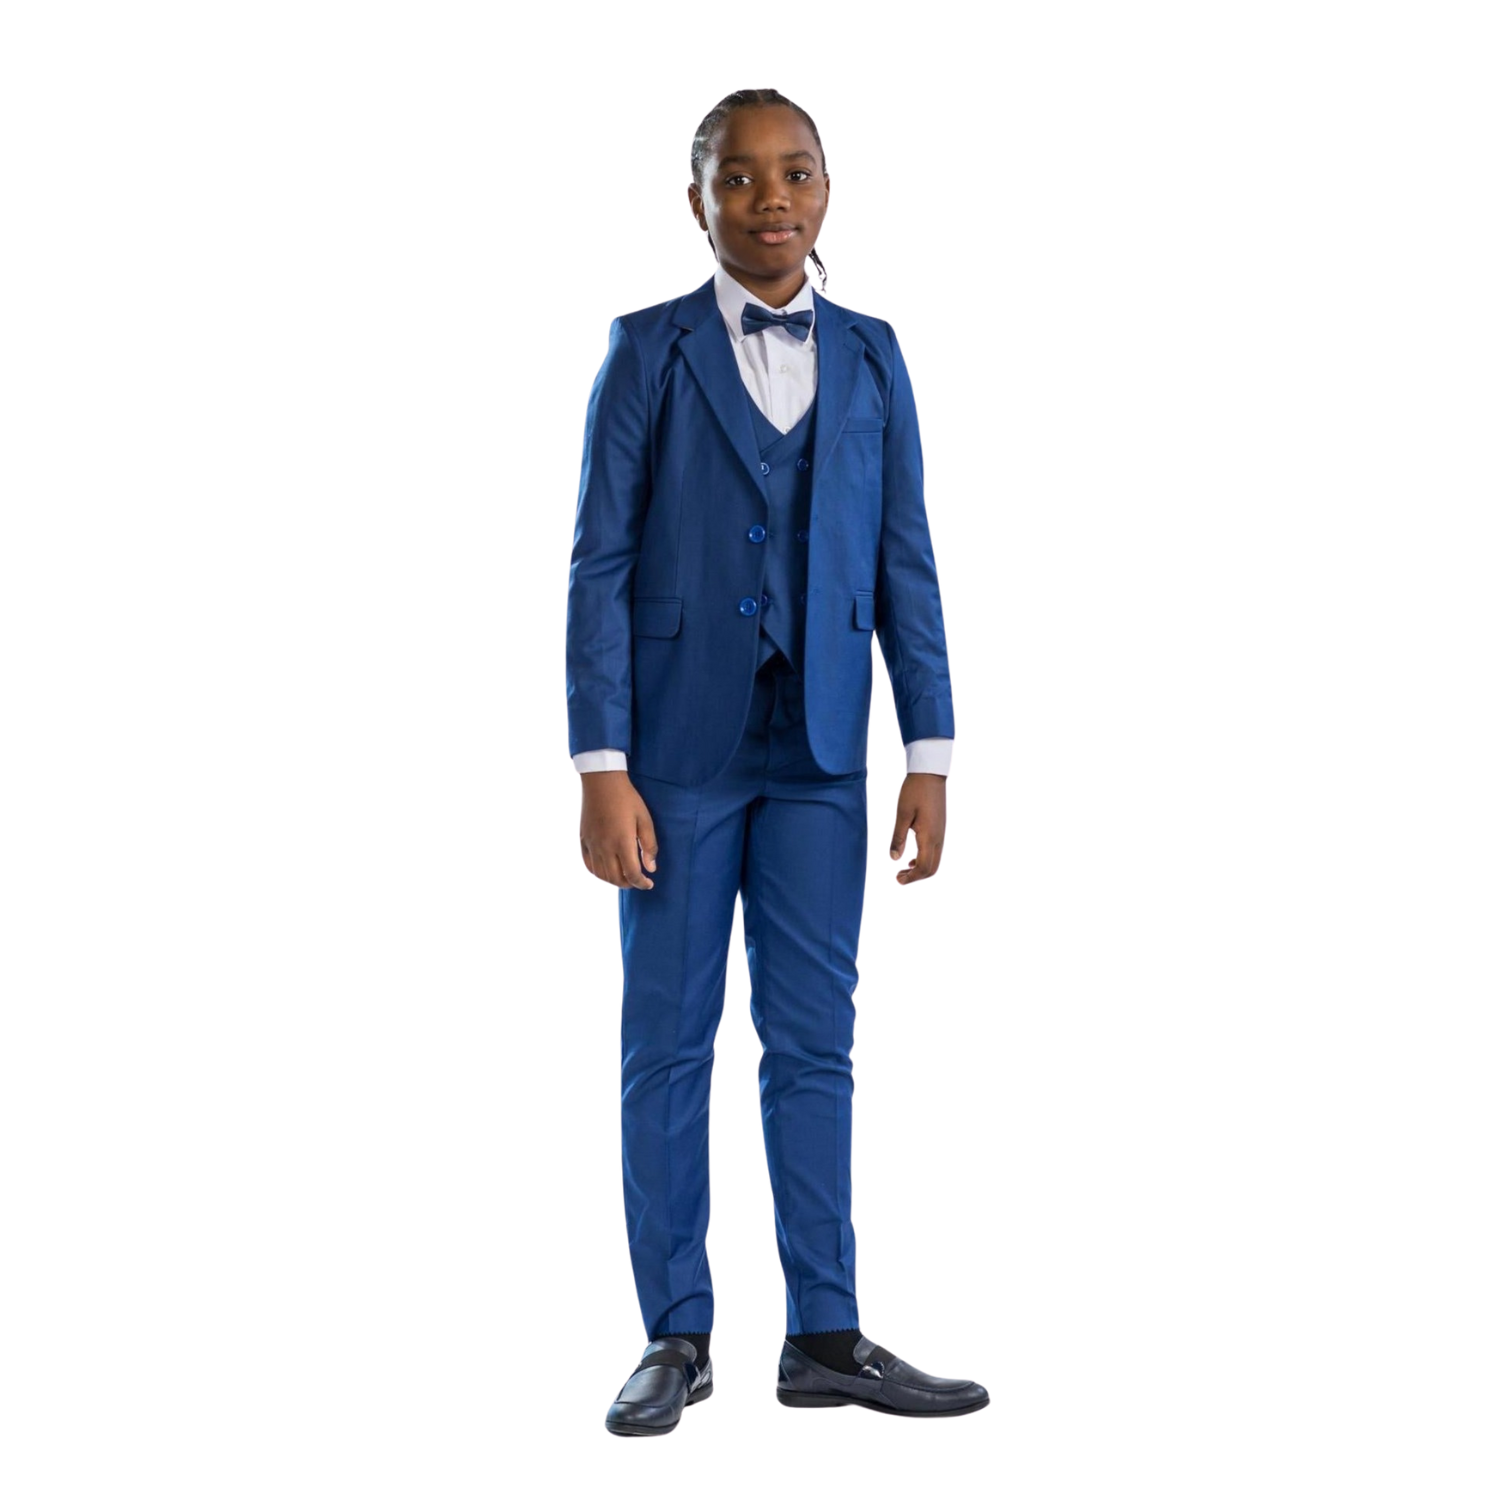 A&J DESIGN Baby Toddler Boys Gentleman Suit Set, 3pcs Outfits Shirts –  AJDESIGNBABY